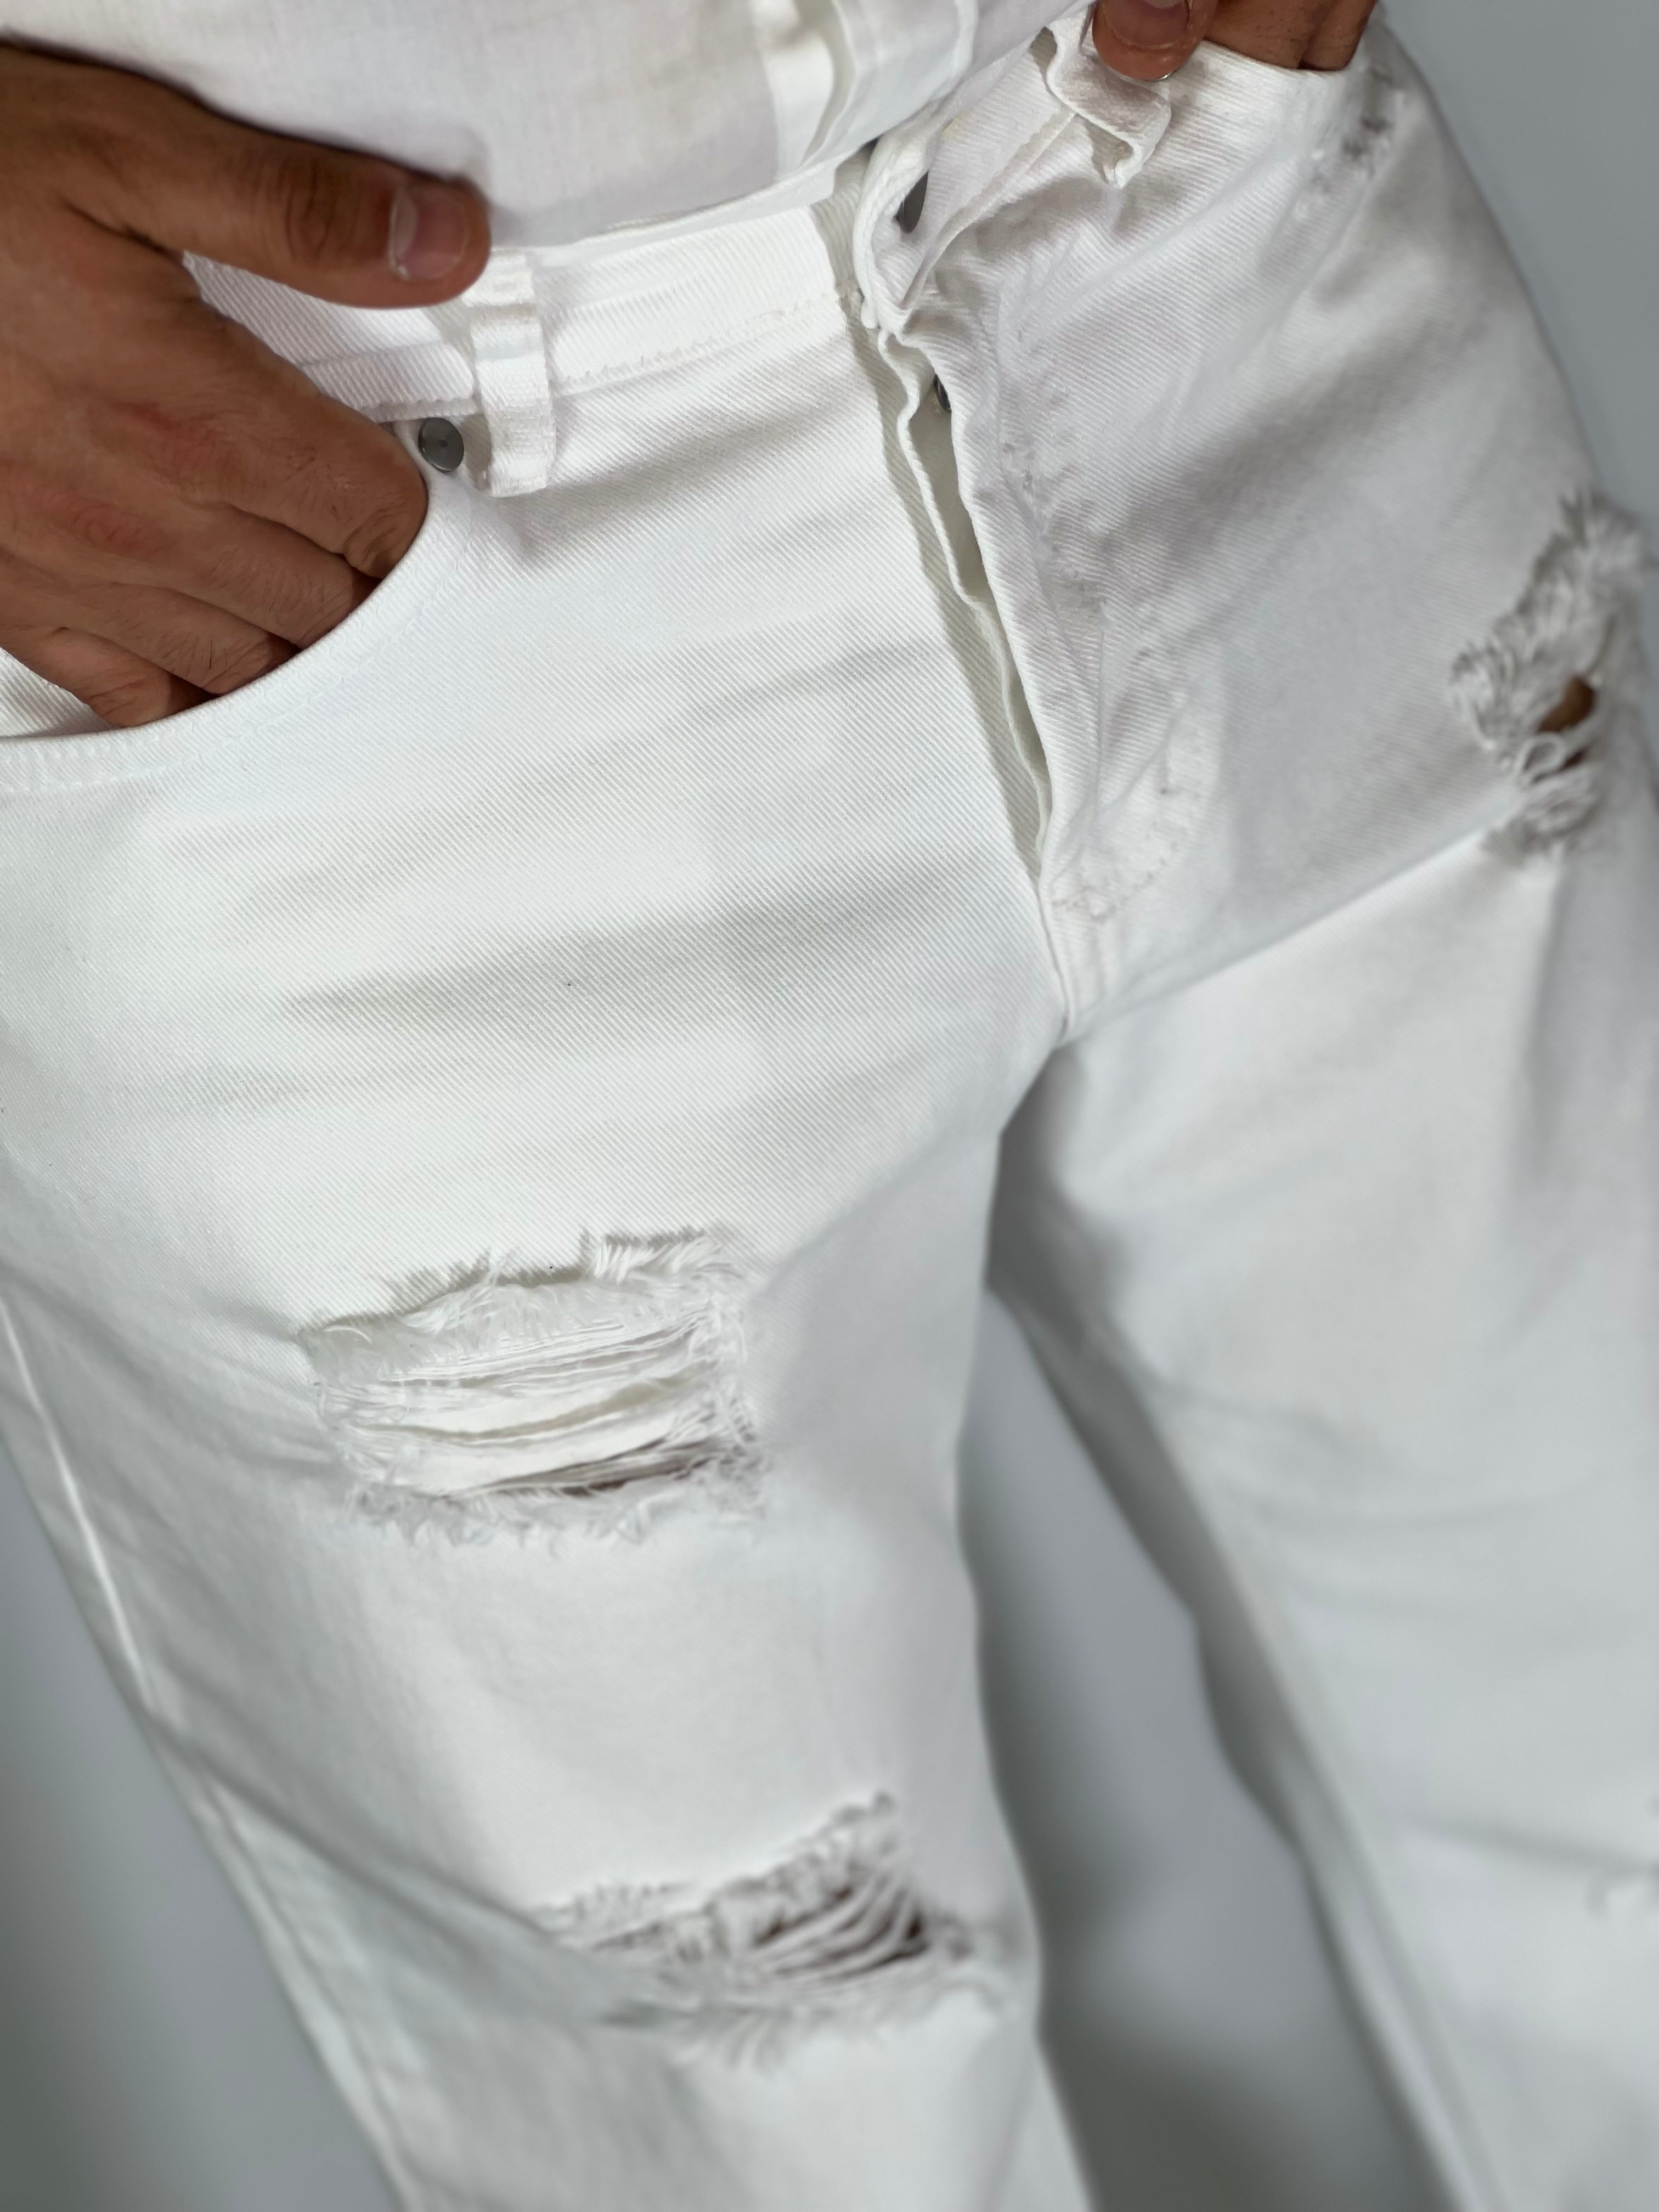 Pantalone loose fit bianco GV81